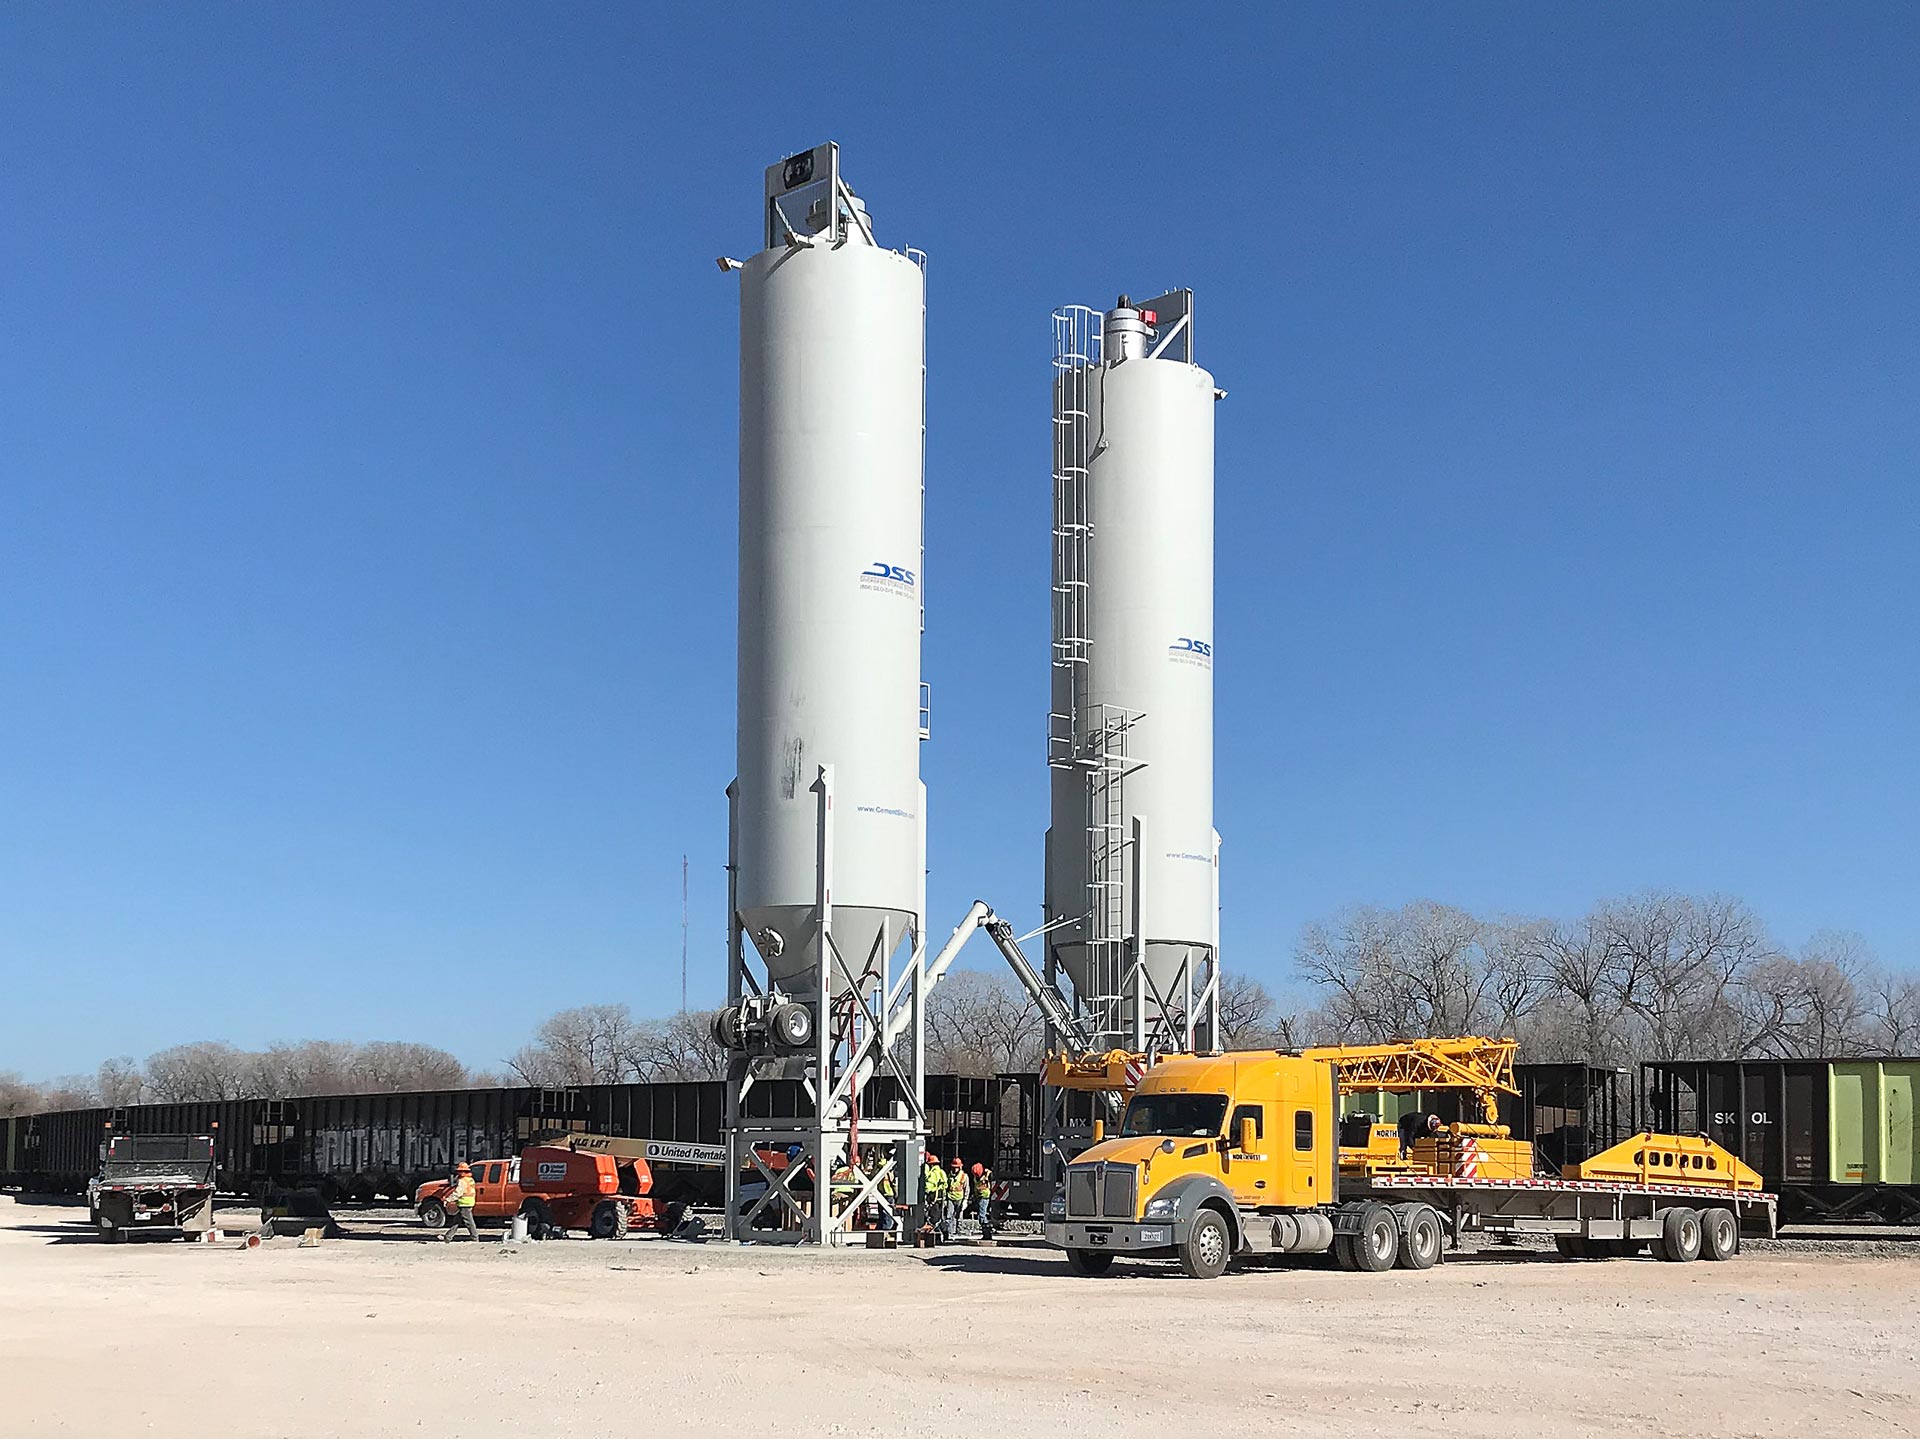 oklahoma concrete terminal silos yellow truck rail dss projects 1920x1440 4x3 1